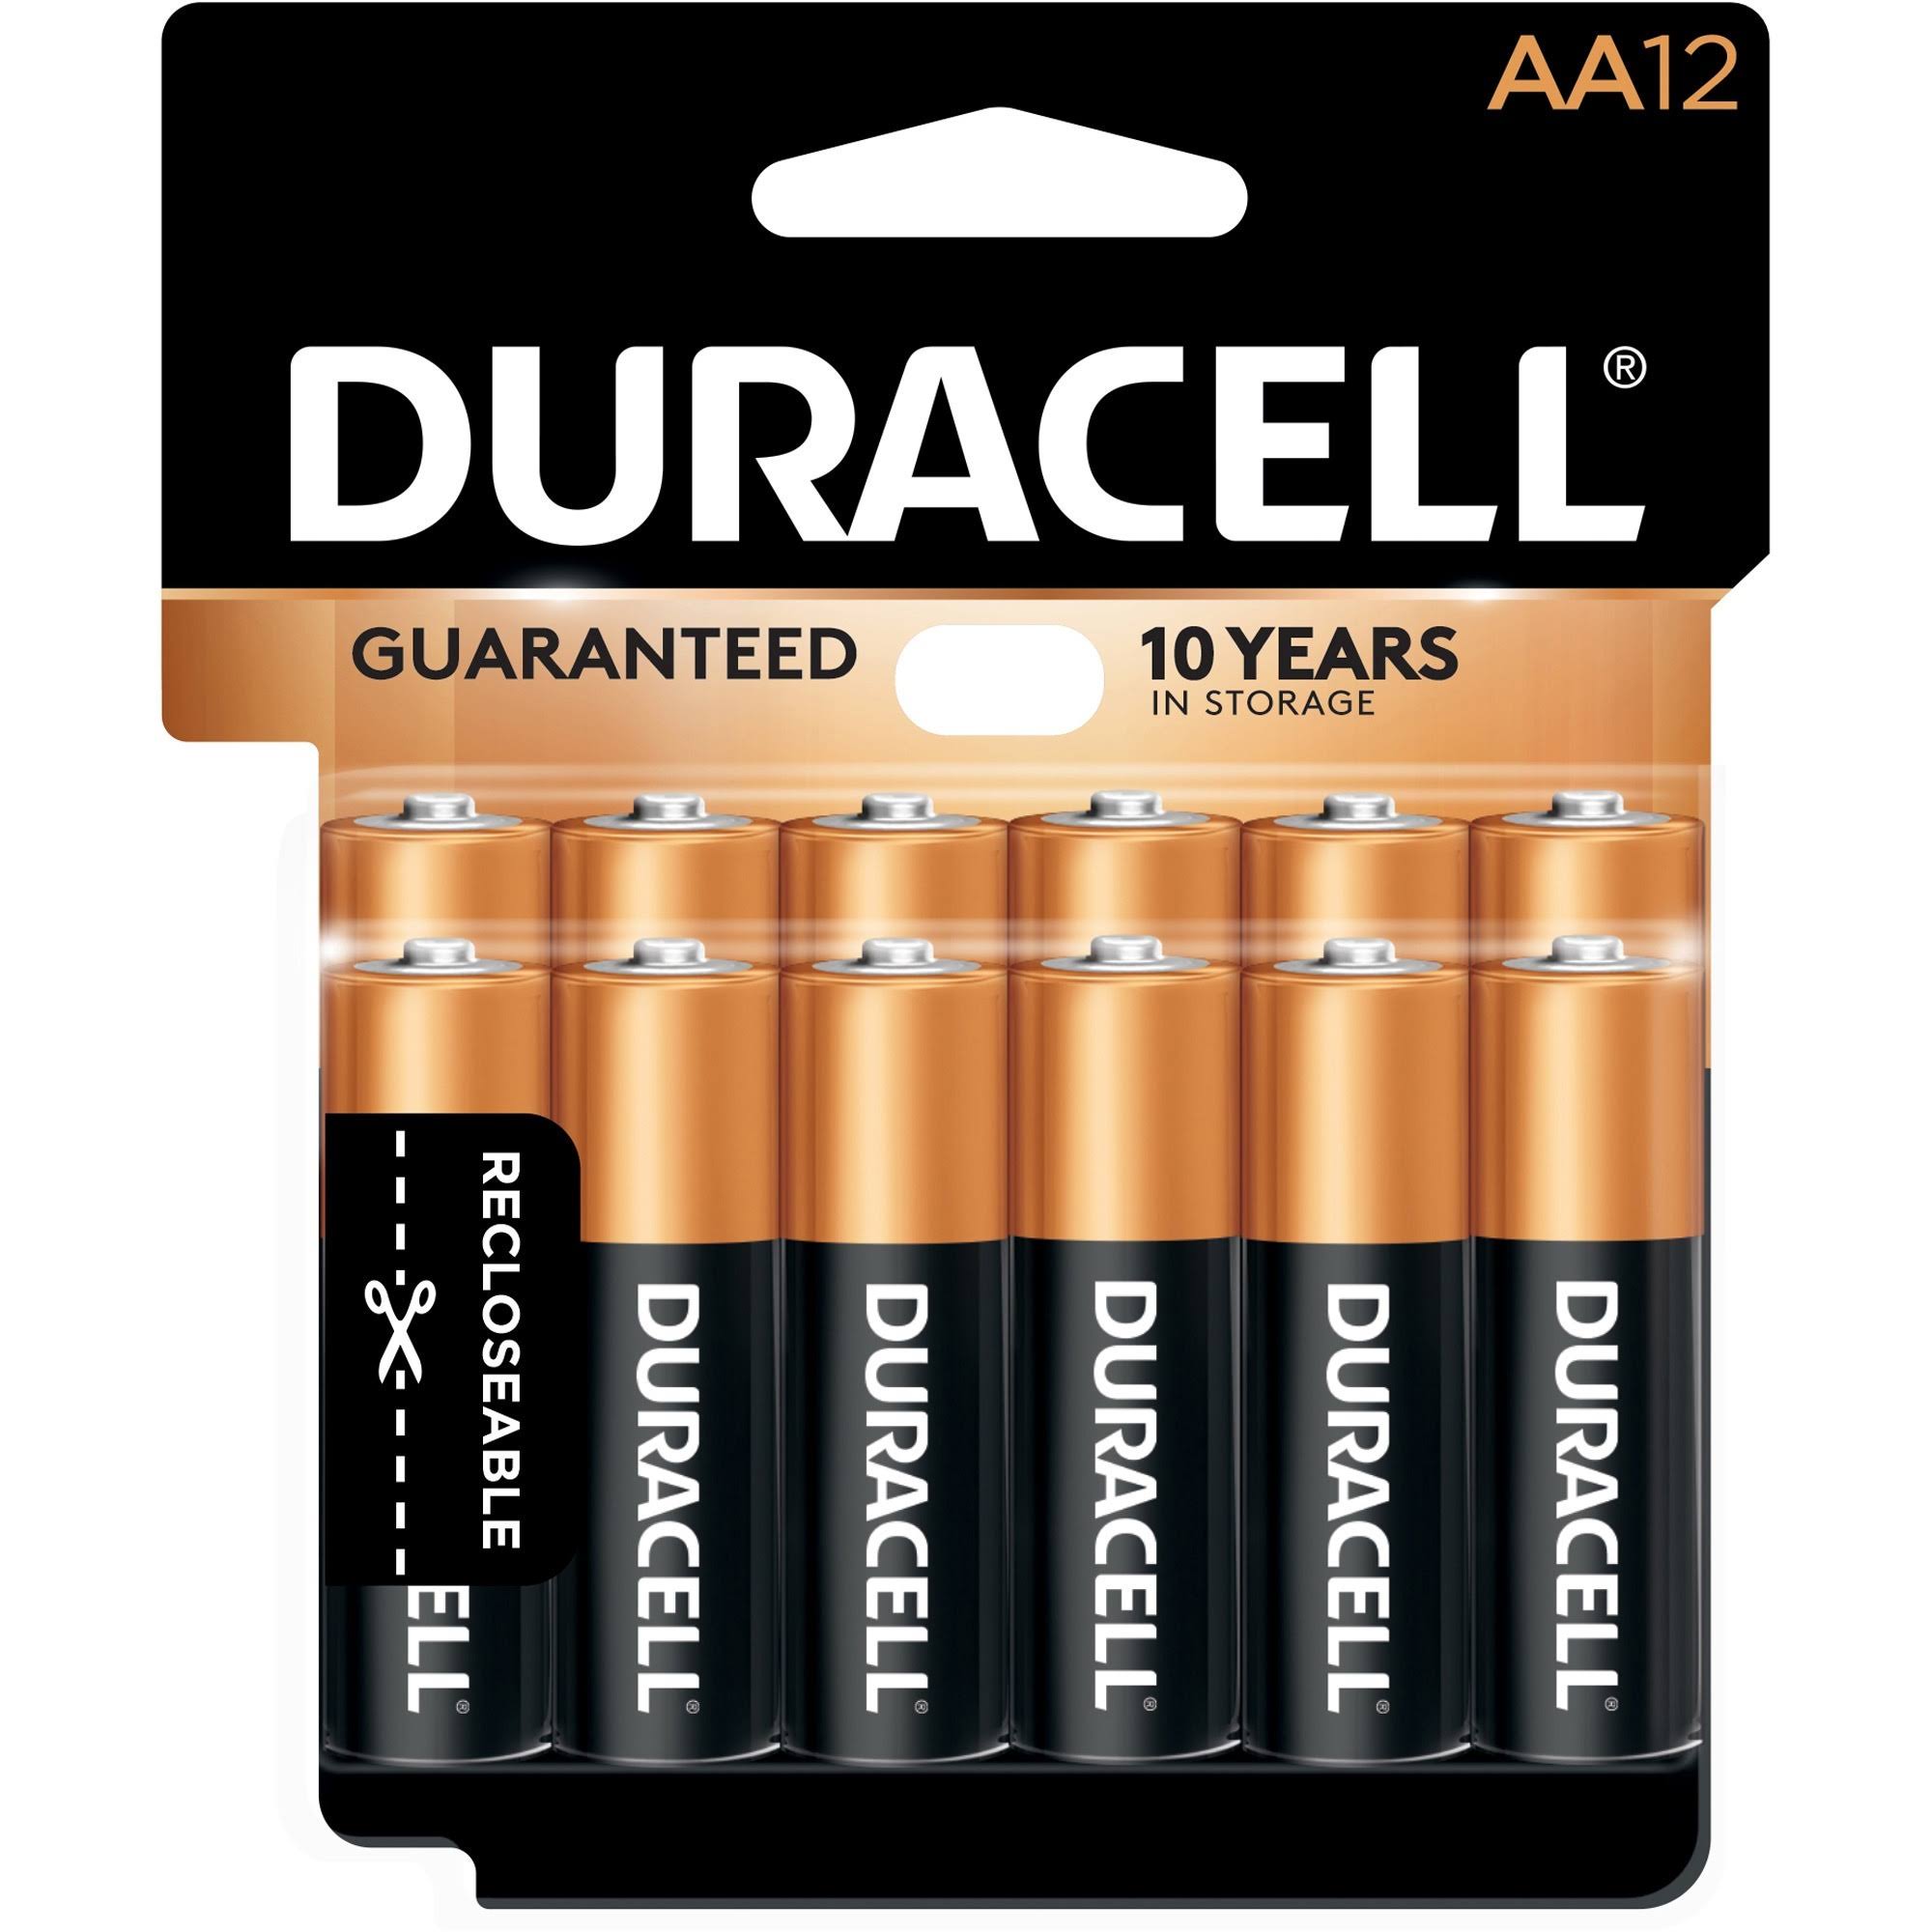 Duracell Coppertop AA Alkaline Batteries - 12 Batteries